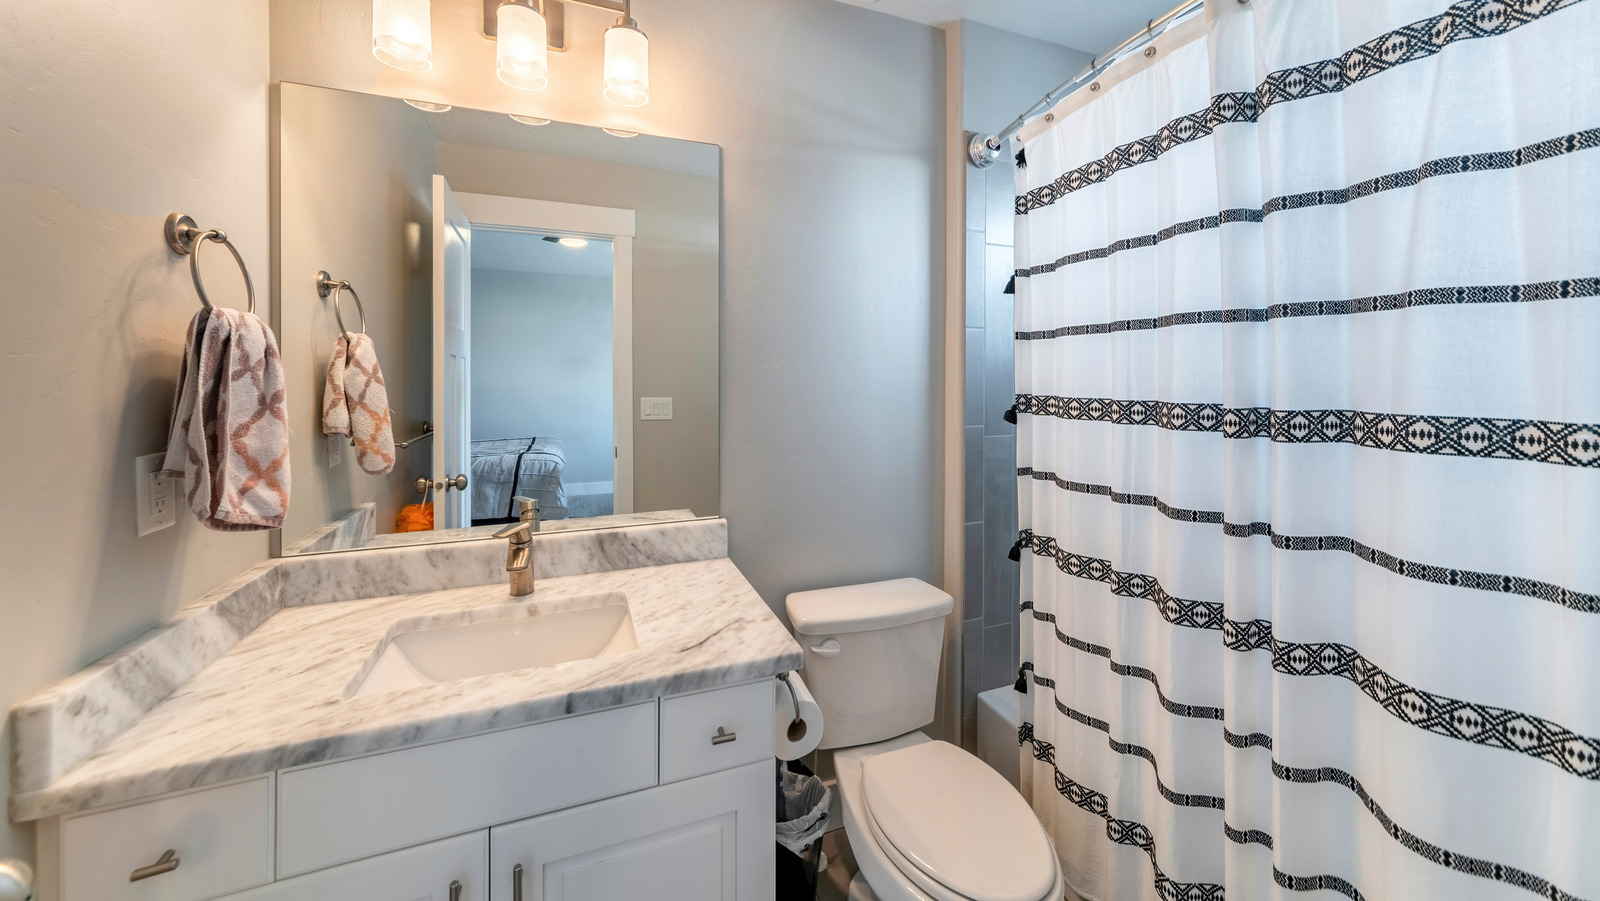 15 Shower Curtain Ideas To Make Your Bathroom Feel Bigger